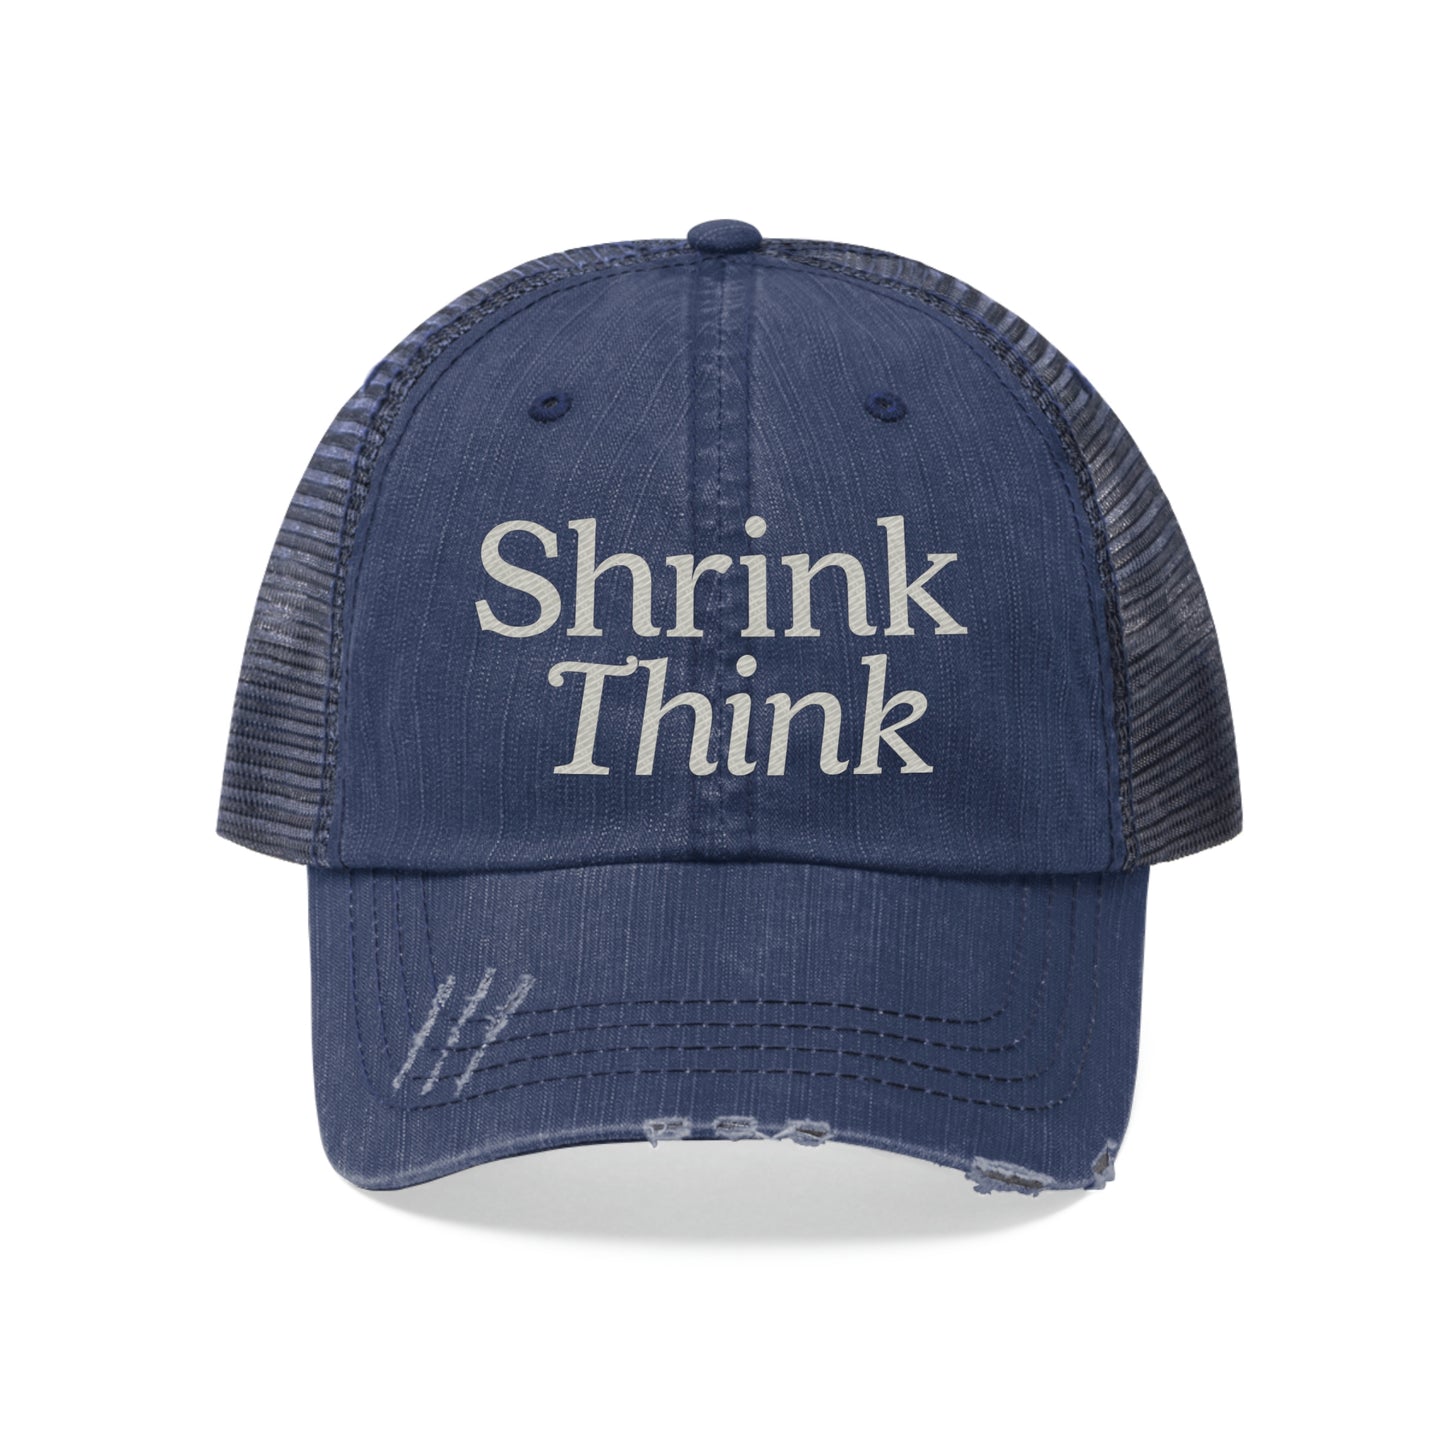 Shrink Think Trucker hat